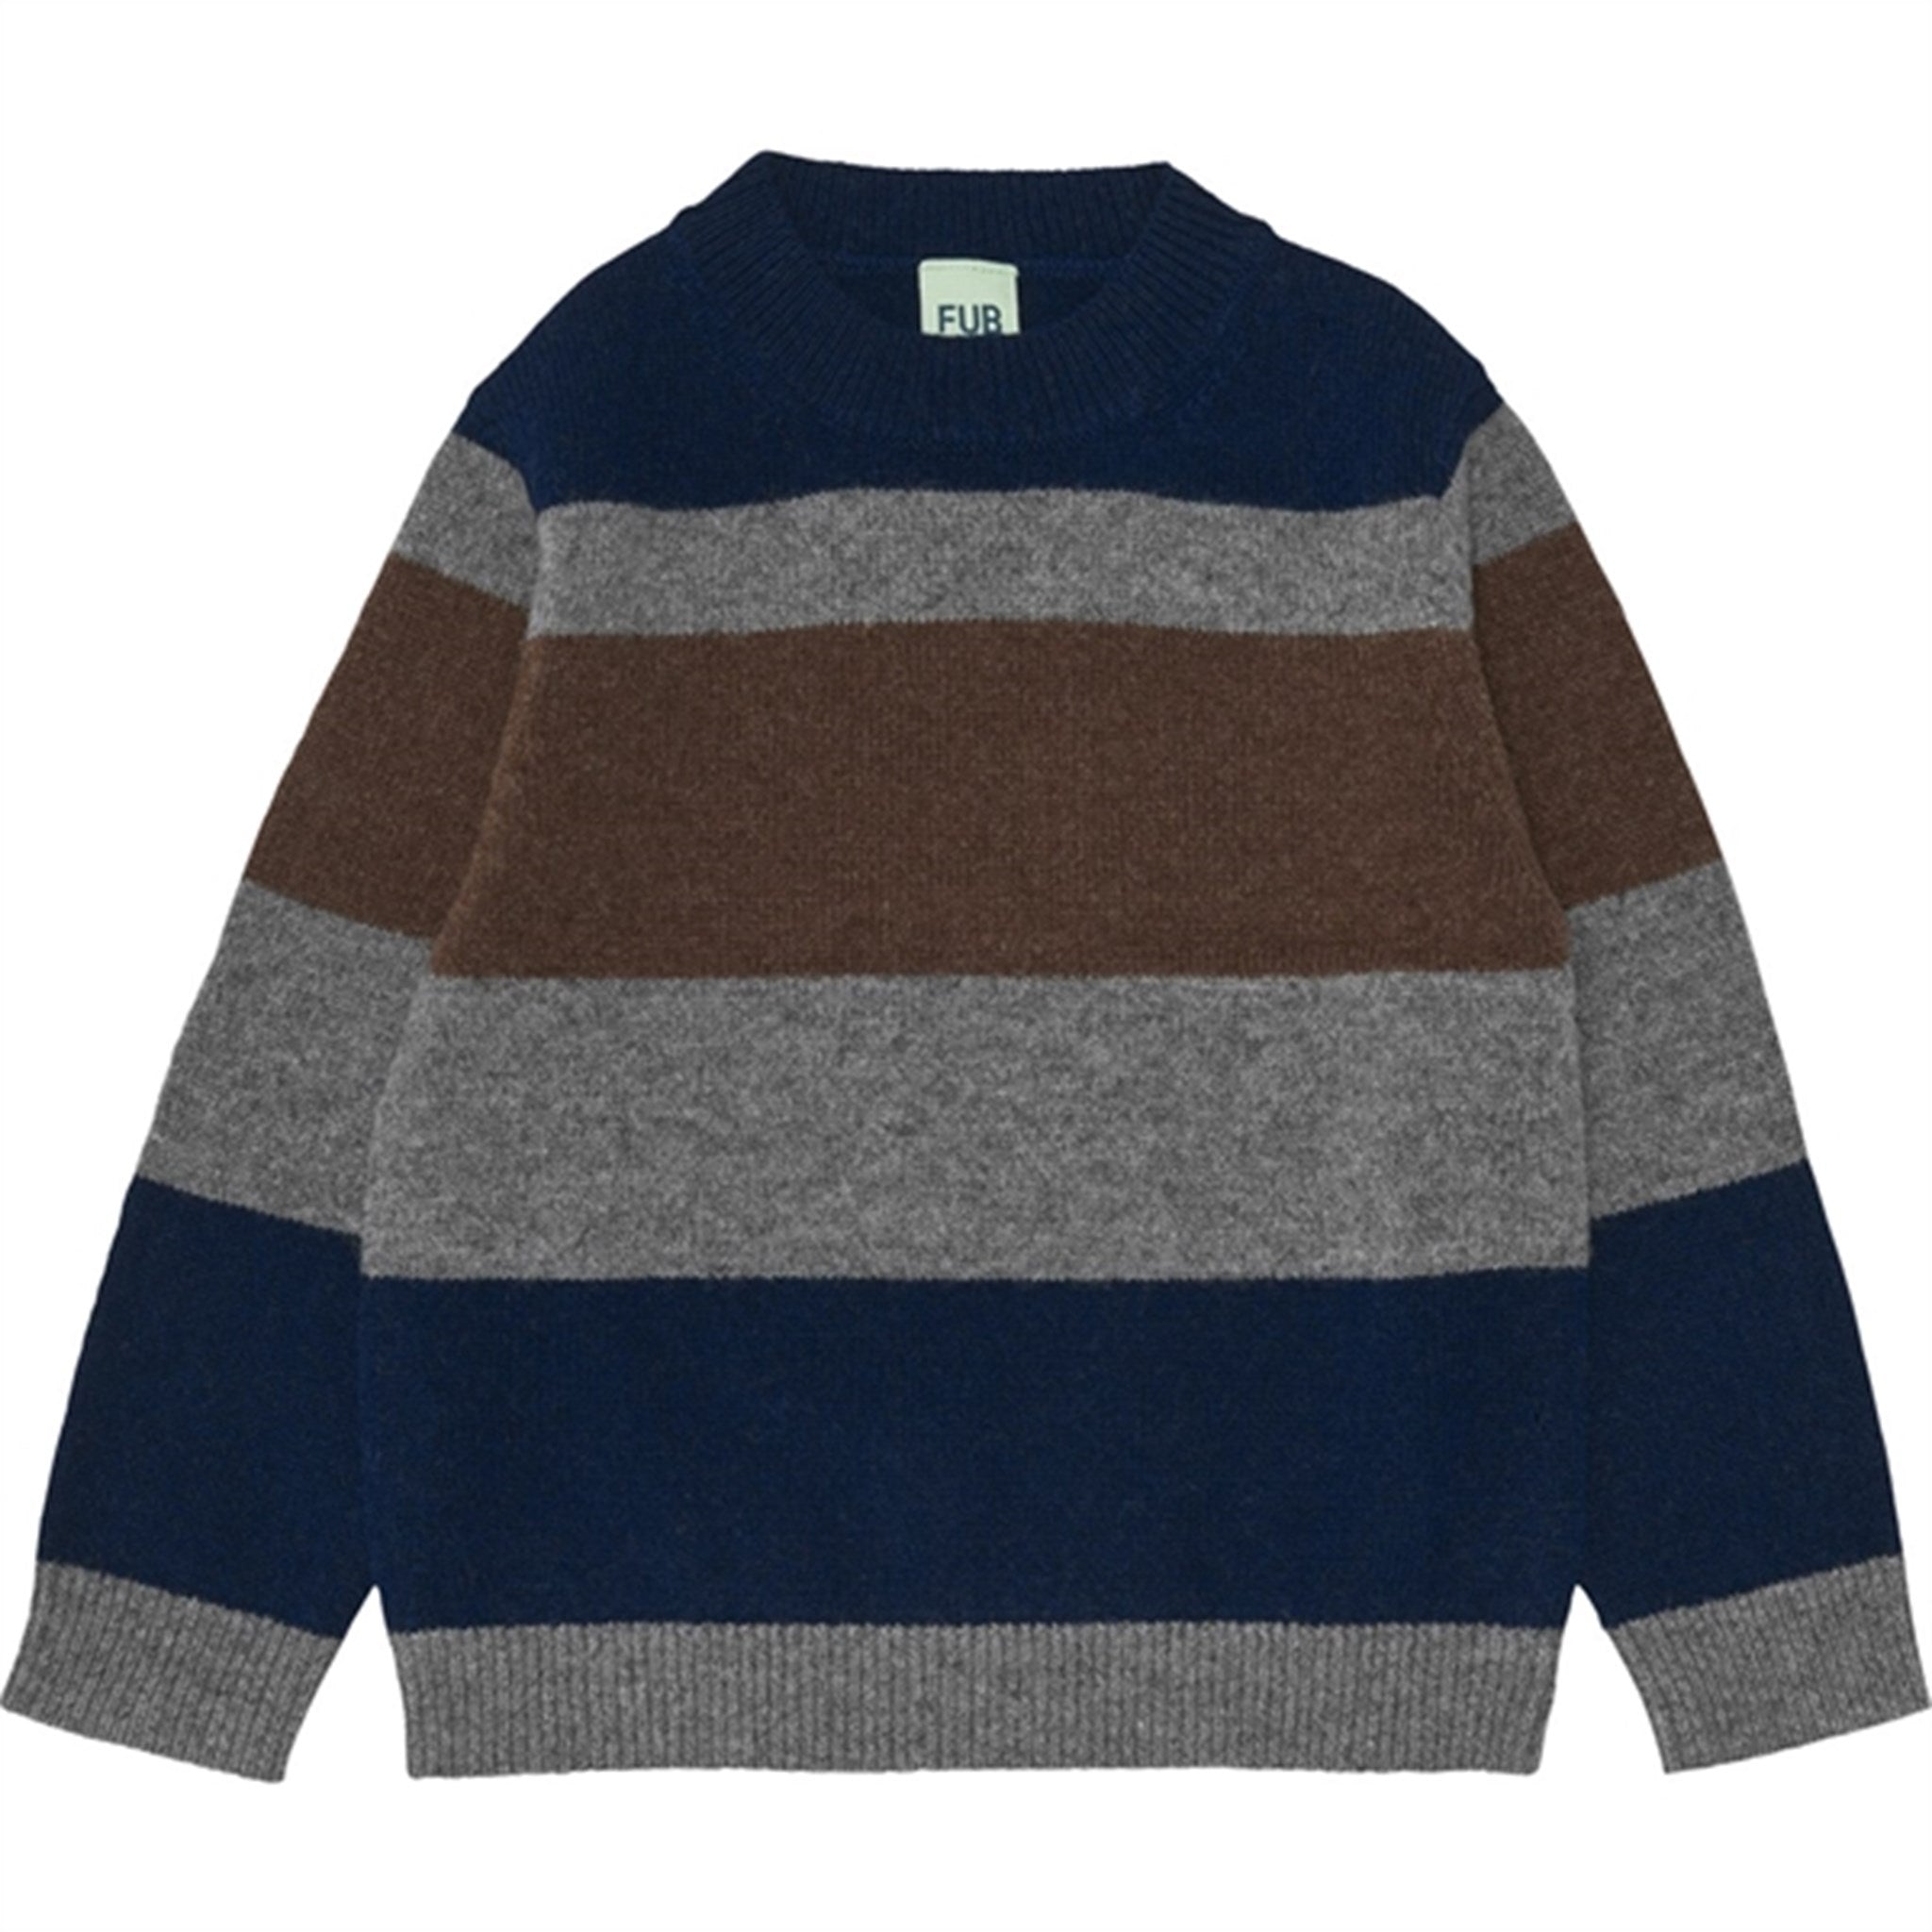 FUB Lammeuld Sweatshirt Stripe